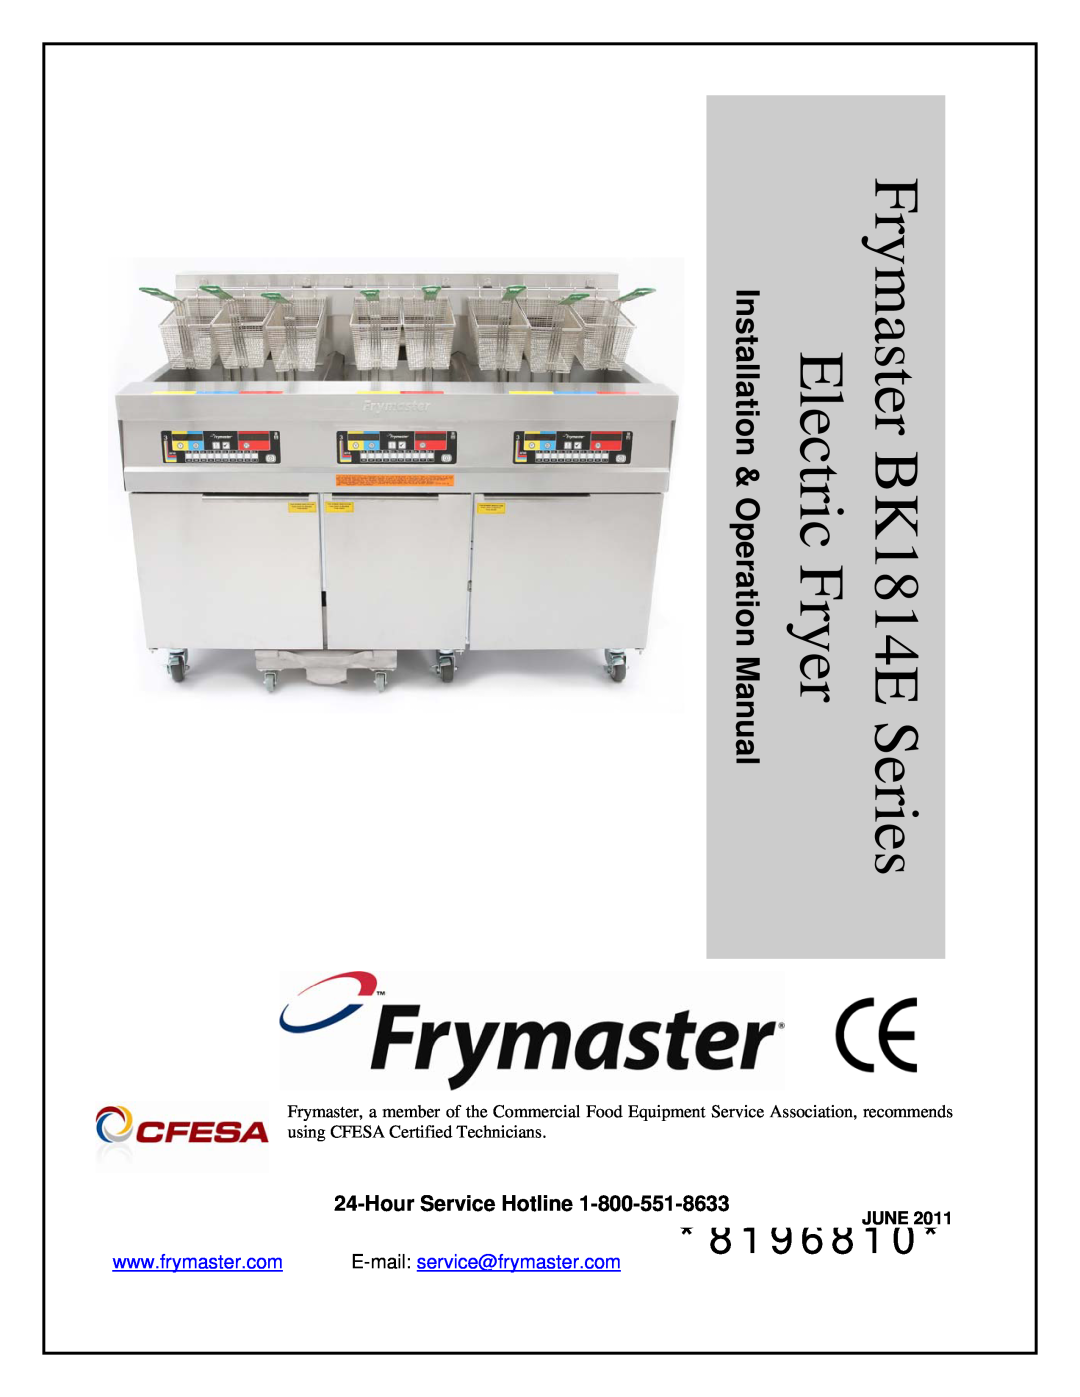 Frymaster operation manual 8196810, Frymaster BK1814E Series Electric Fryer, Installation & Operation Manual, June 